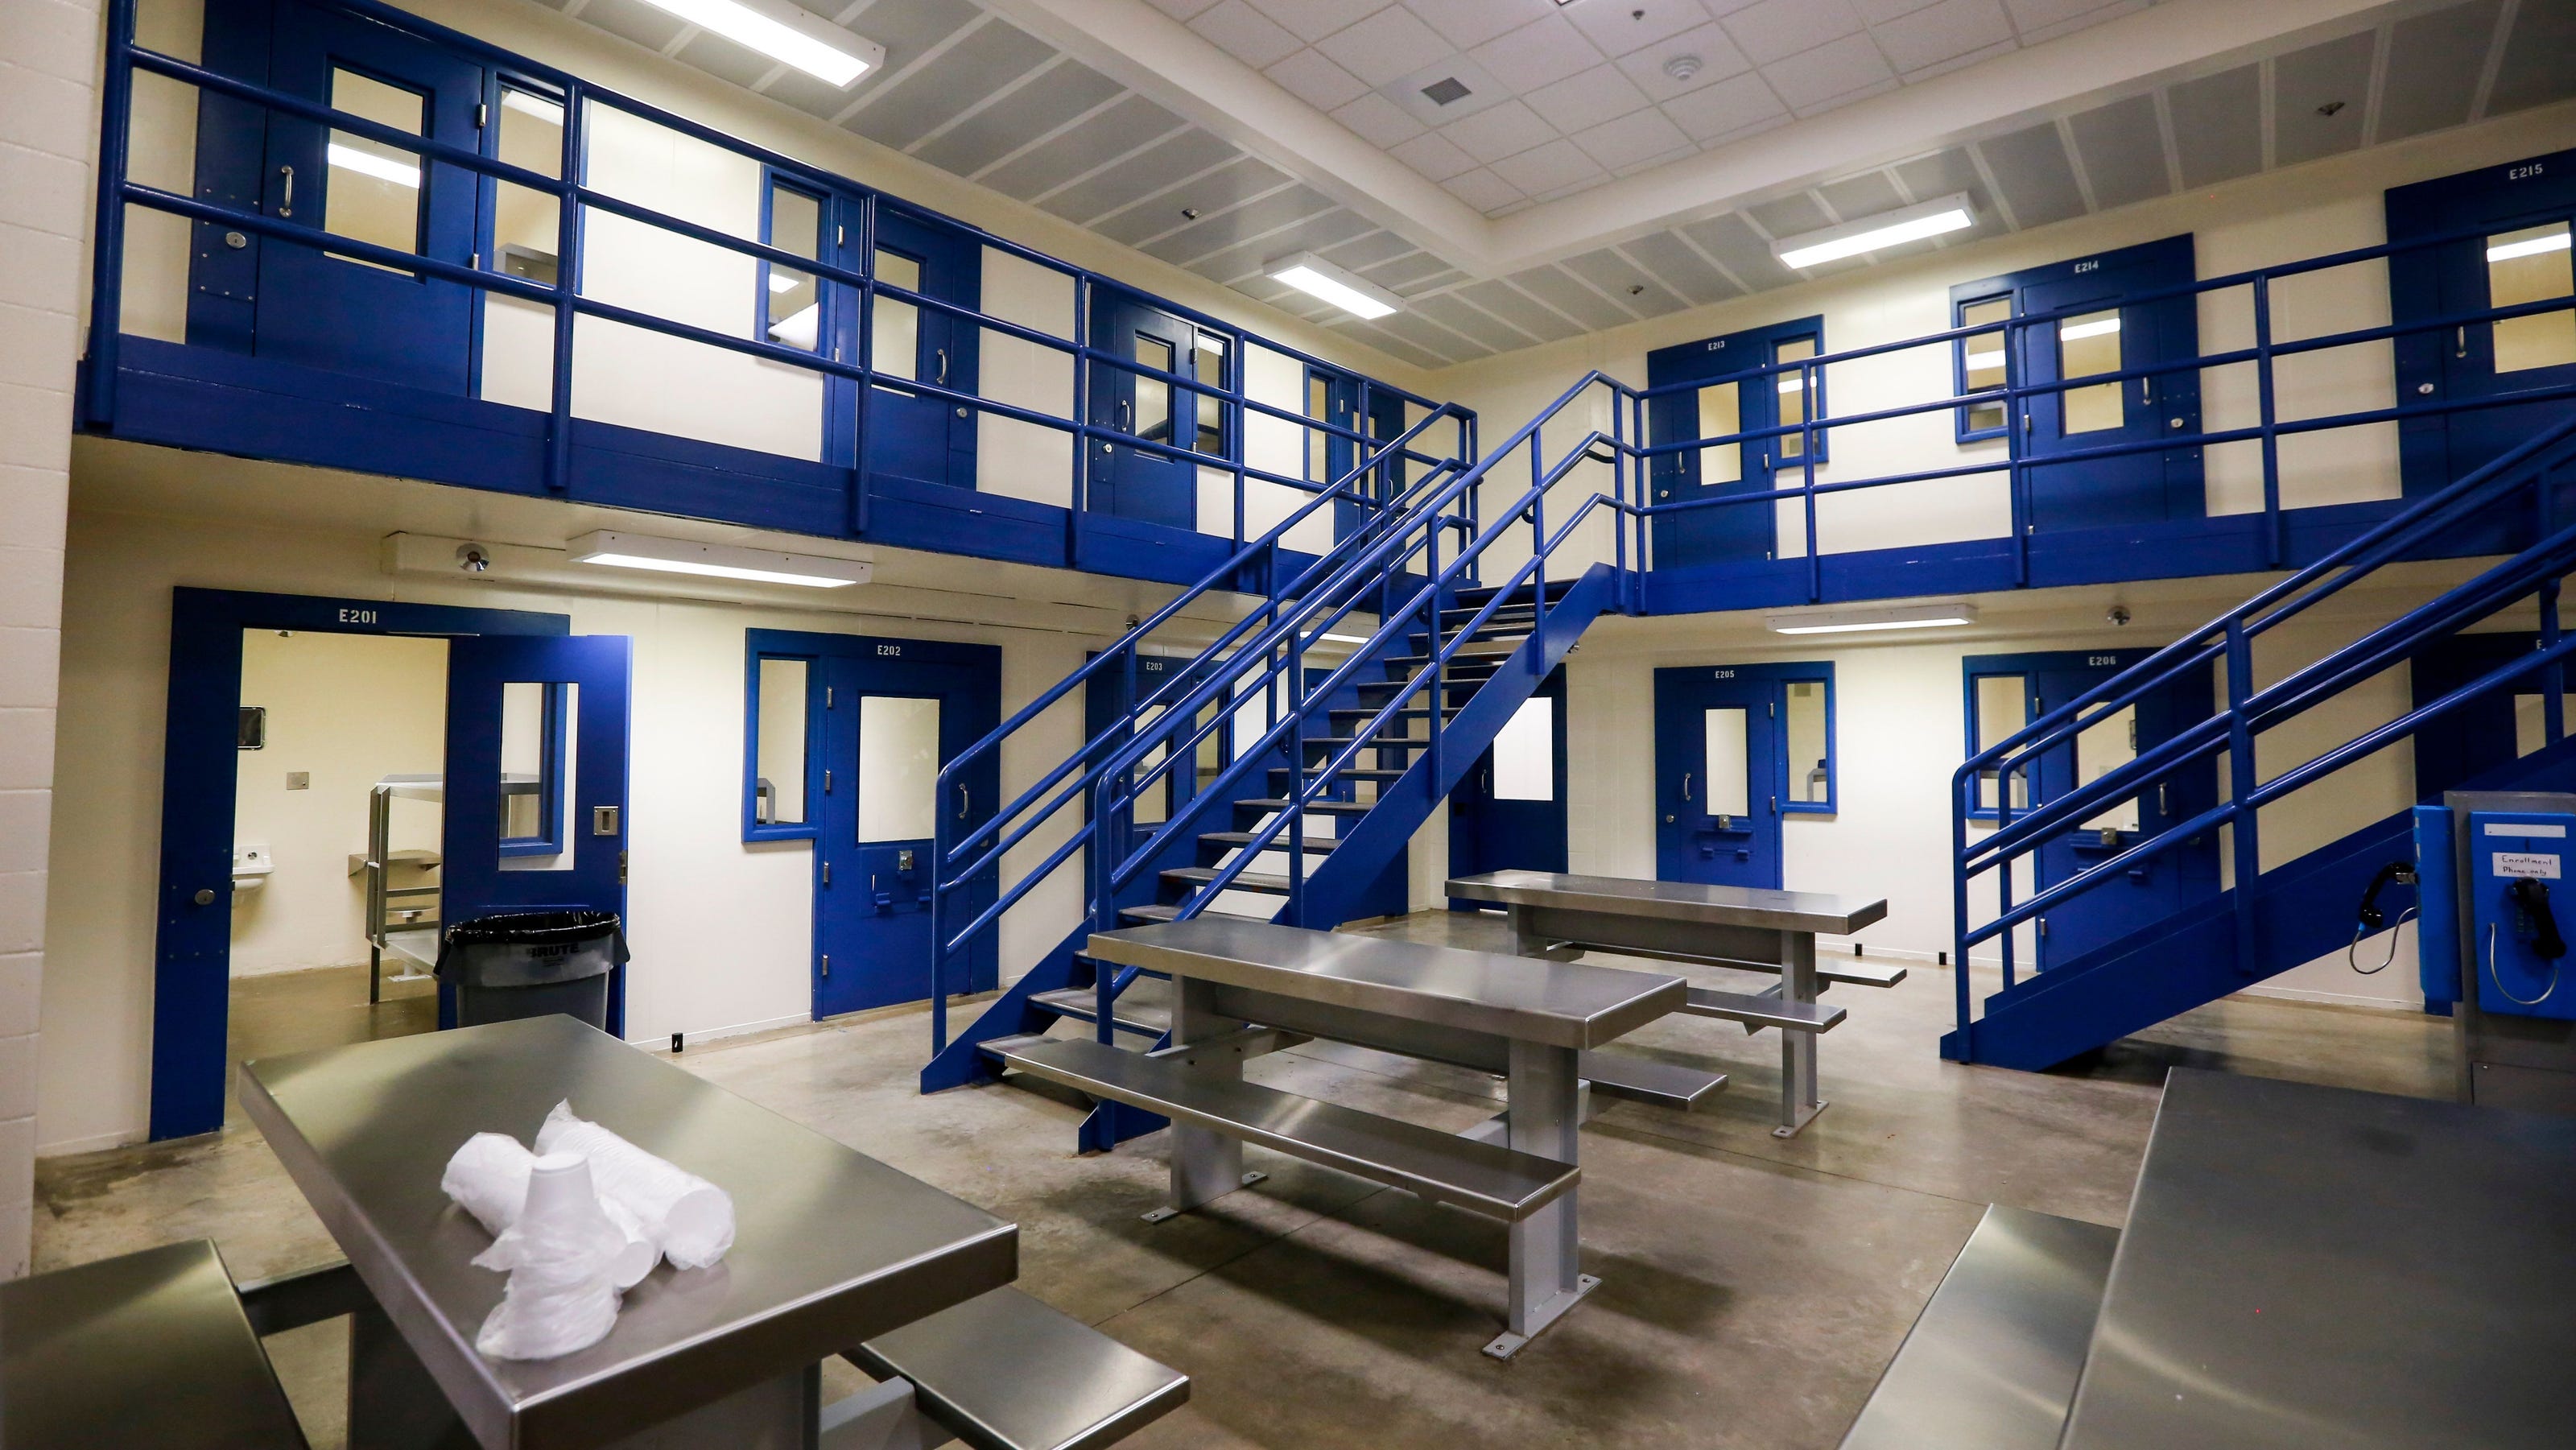 COVID19 in Iowa 89 inmates, nine staff test positve at Polk County Jail